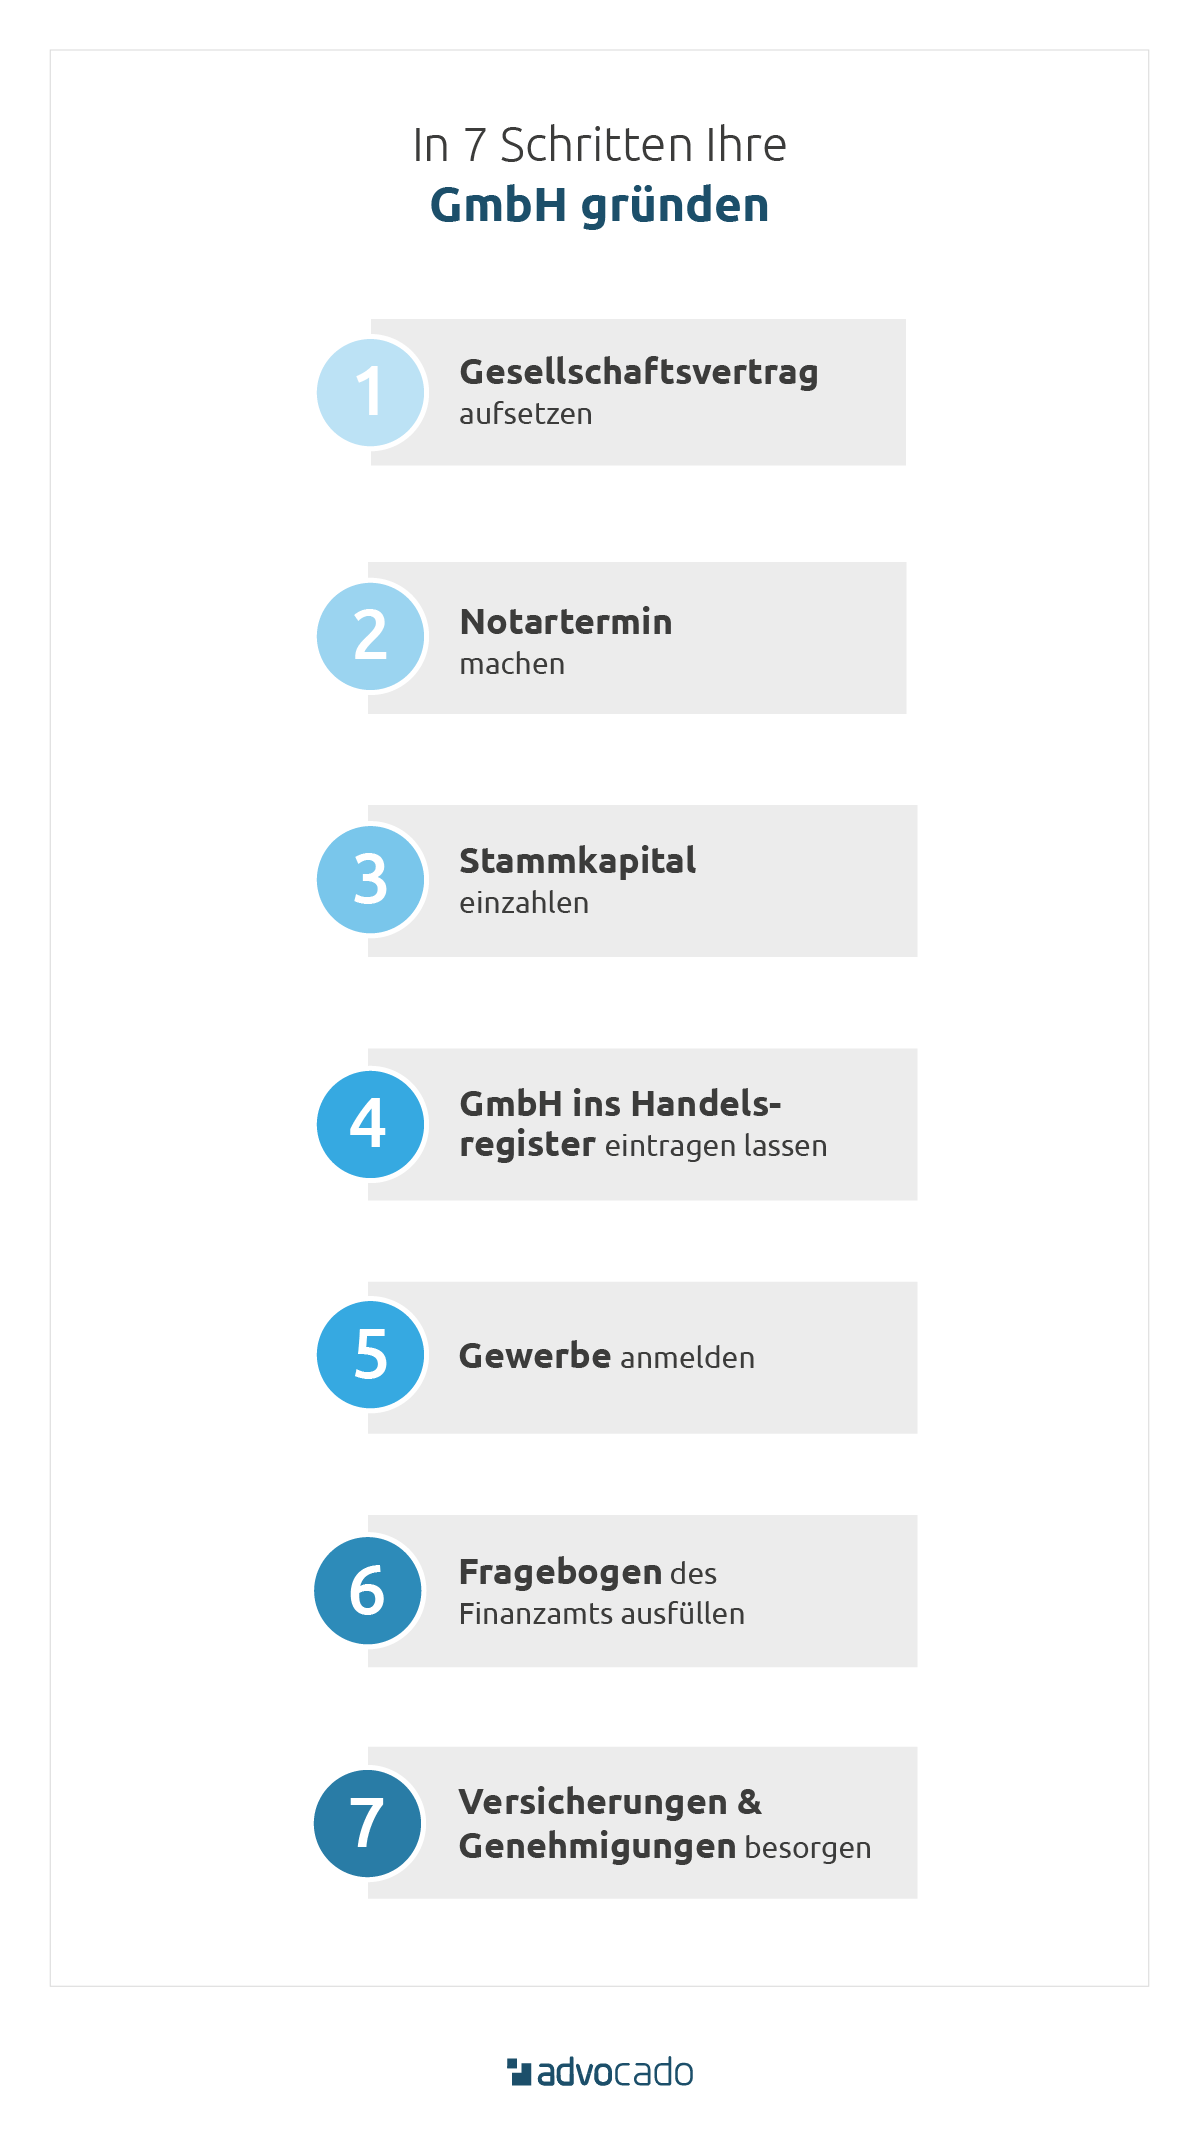 Infografik: GmbH gründen in 7 Schritten